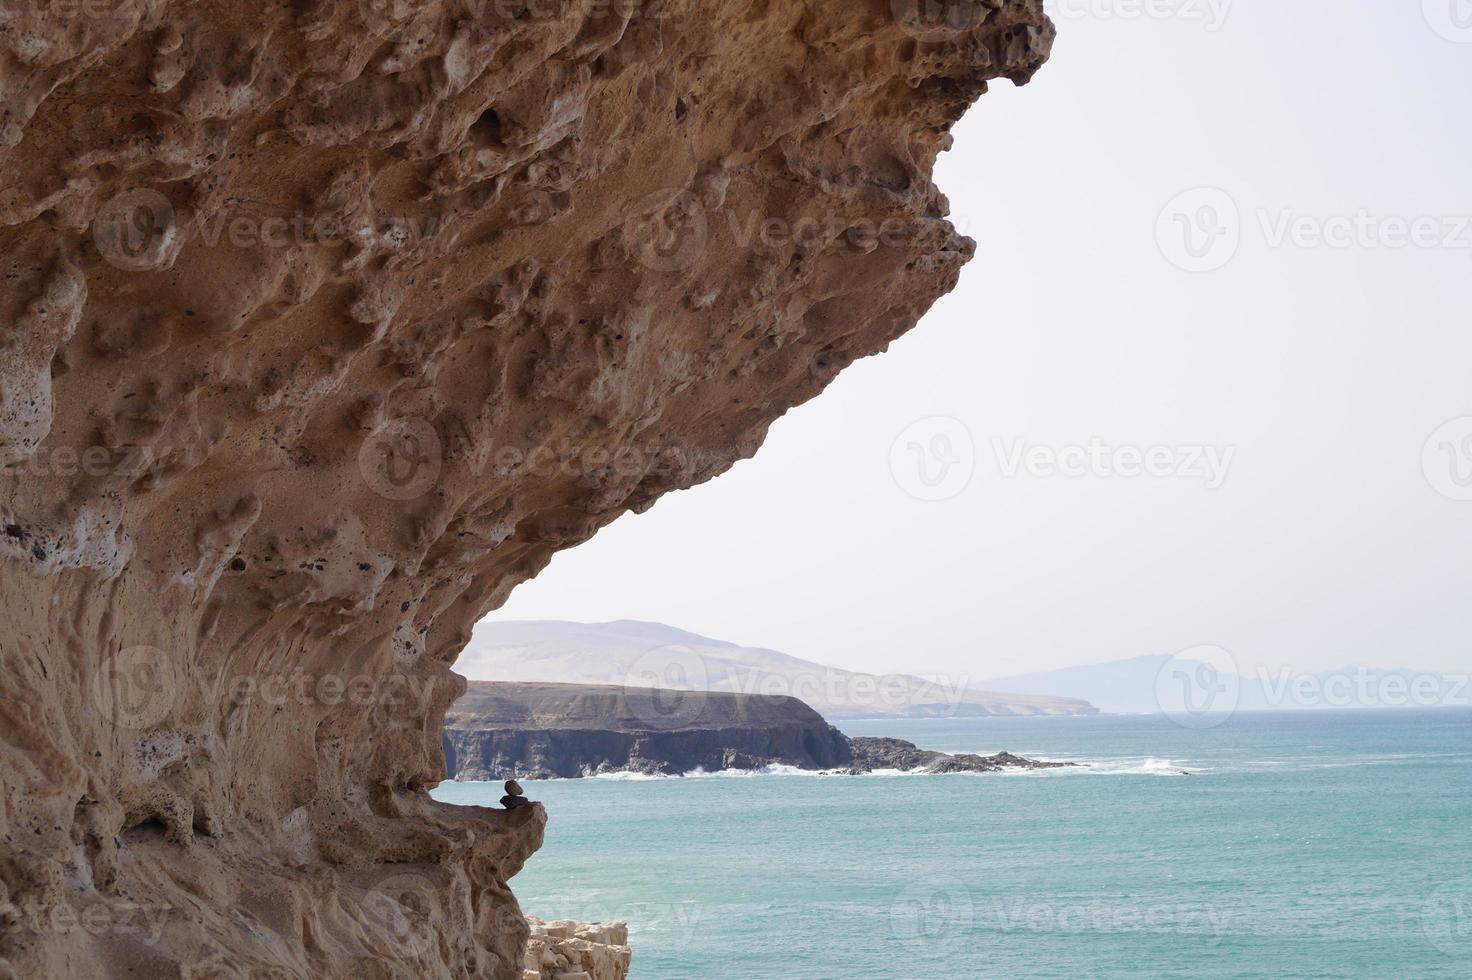 le grotte di ajuy - fuerteventura - spagna foto